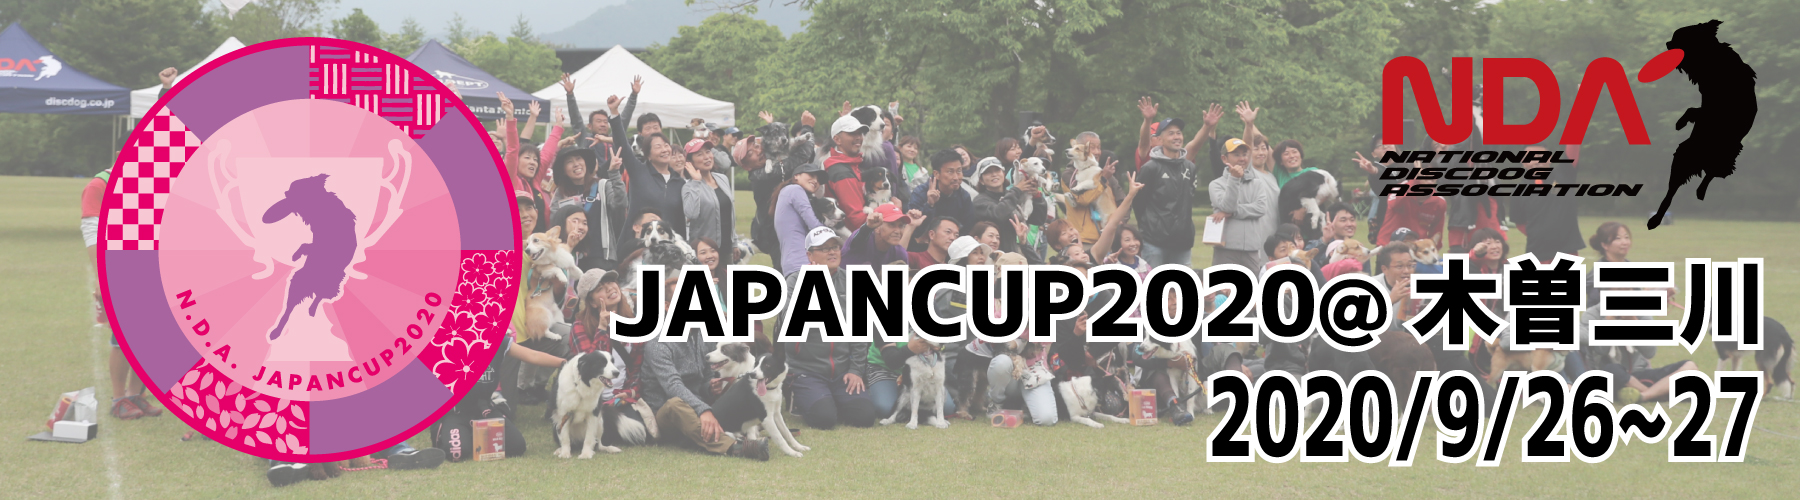 NDA Japan Cup TOP